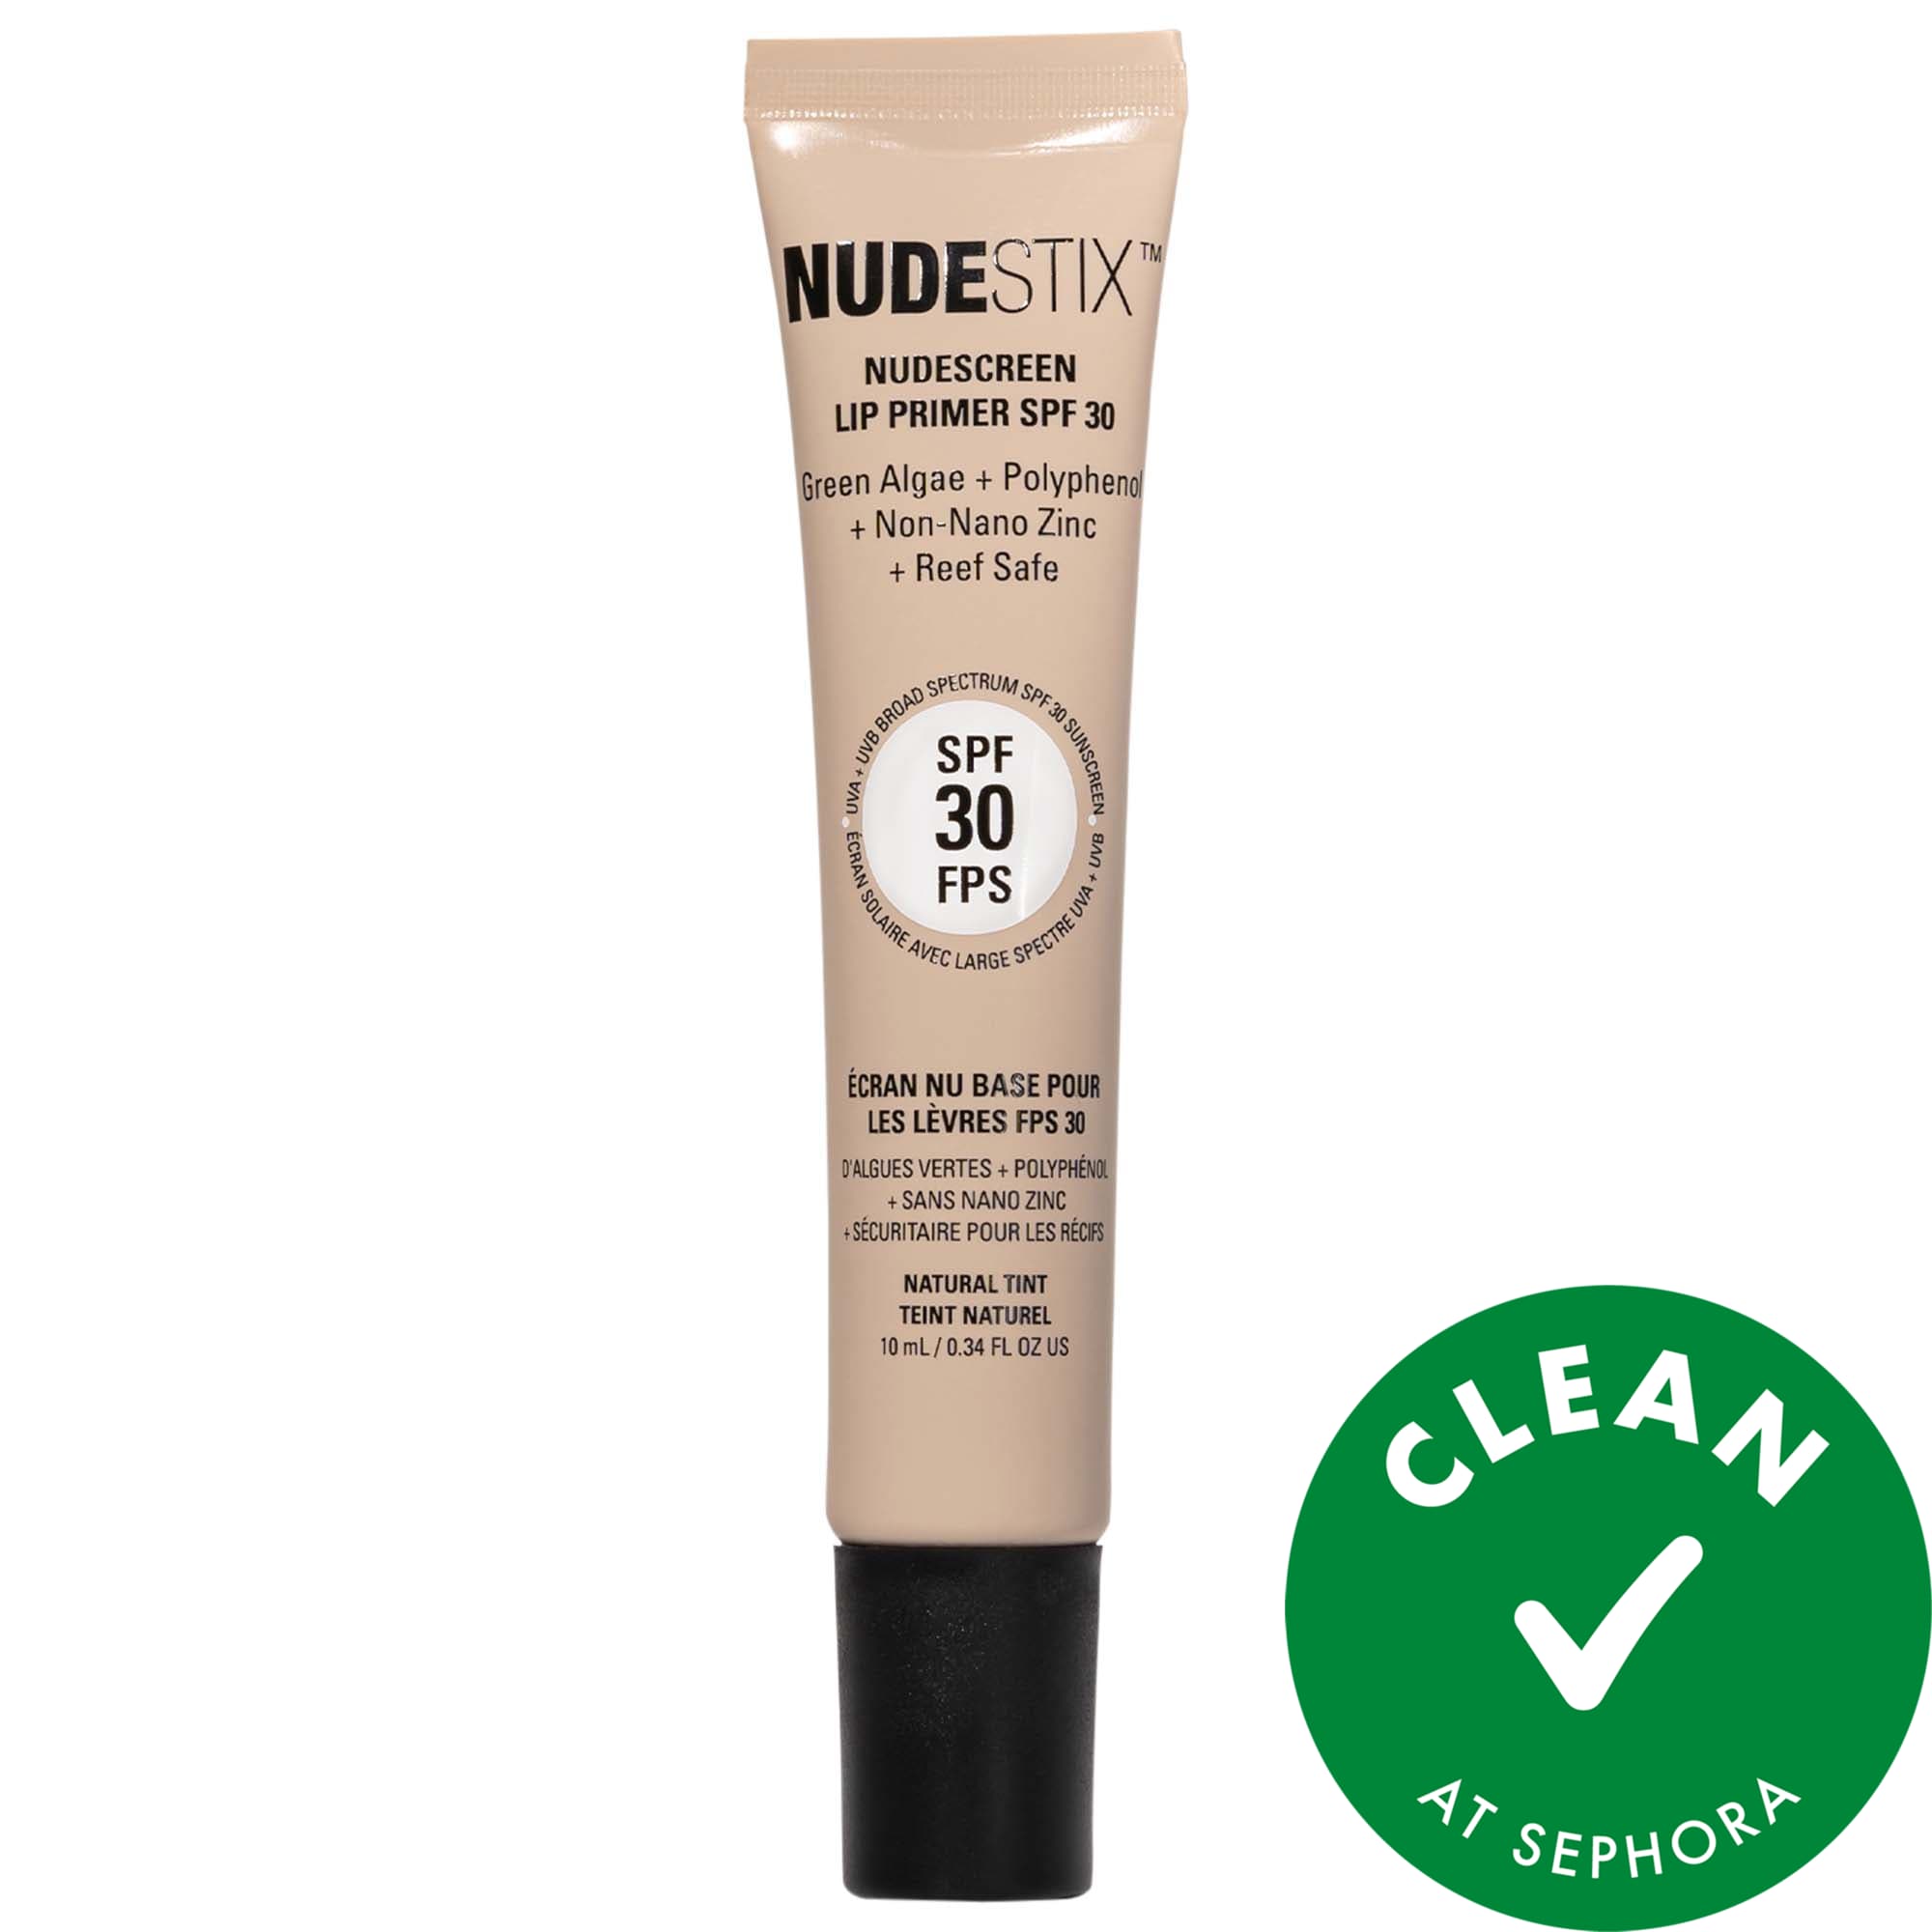 Nudescreen Lip Primer SPF 30 Natural NUDESTIX